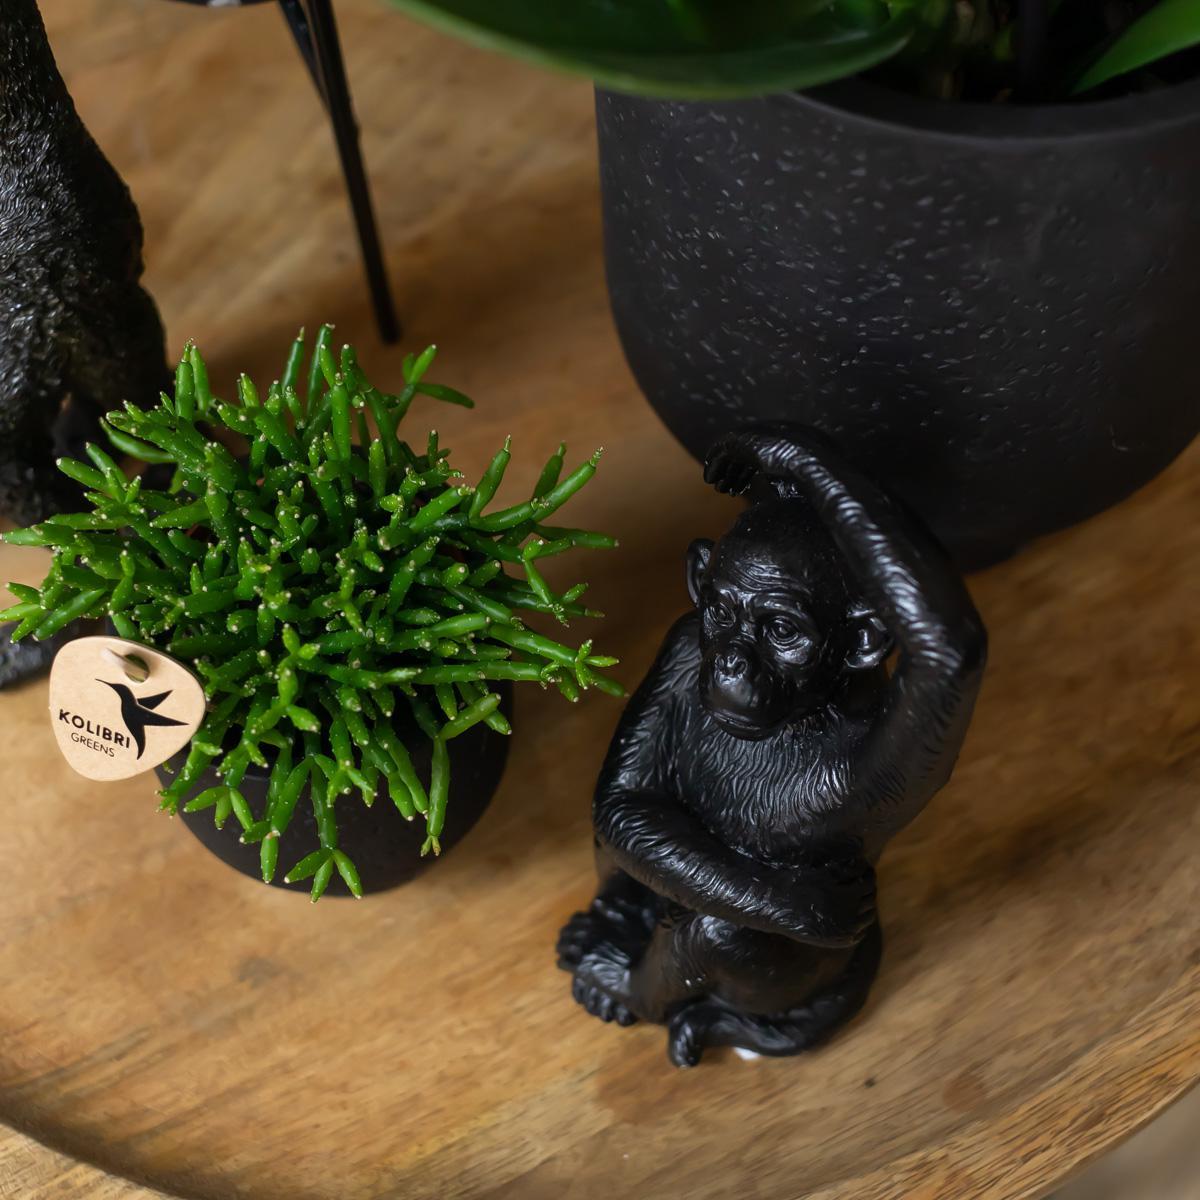 Kolibri Home | Ornament - Decoratie beeld Sitting Monkey zwart